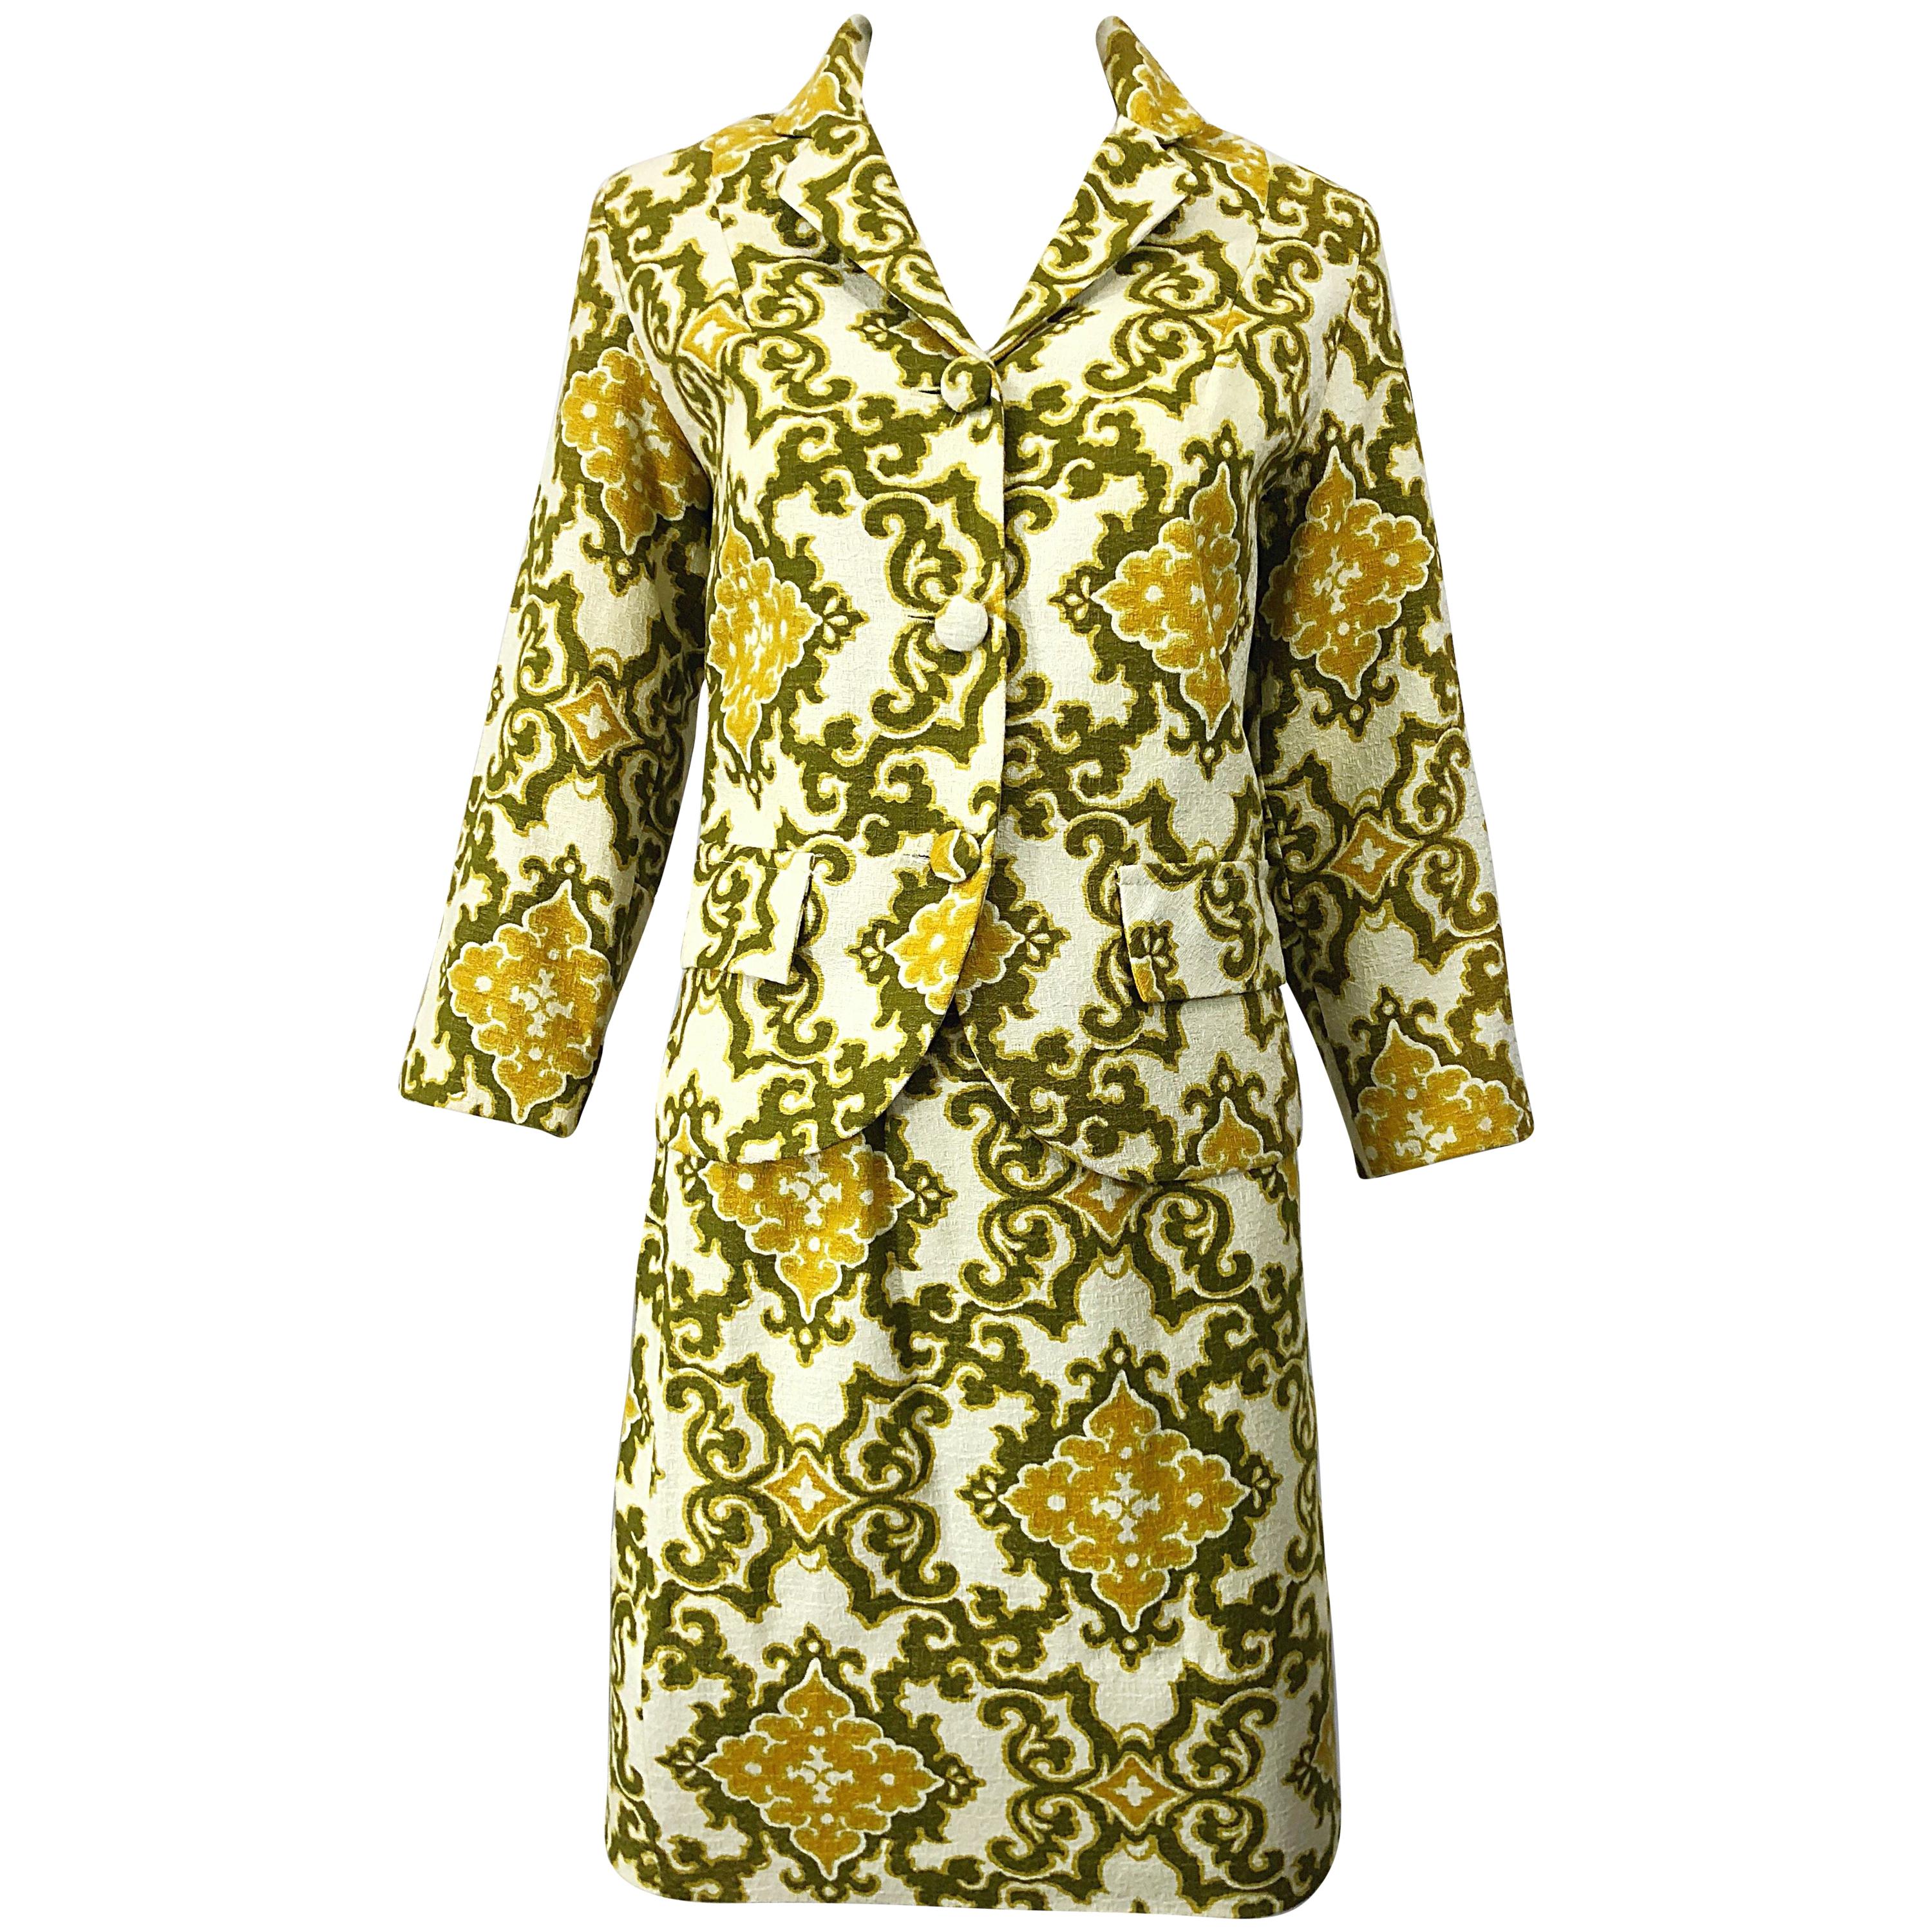 Chic 1960s Joseph Magnin Baroque Print Chartreuse Silk + Cotton 60s Skirt Suit For Sale